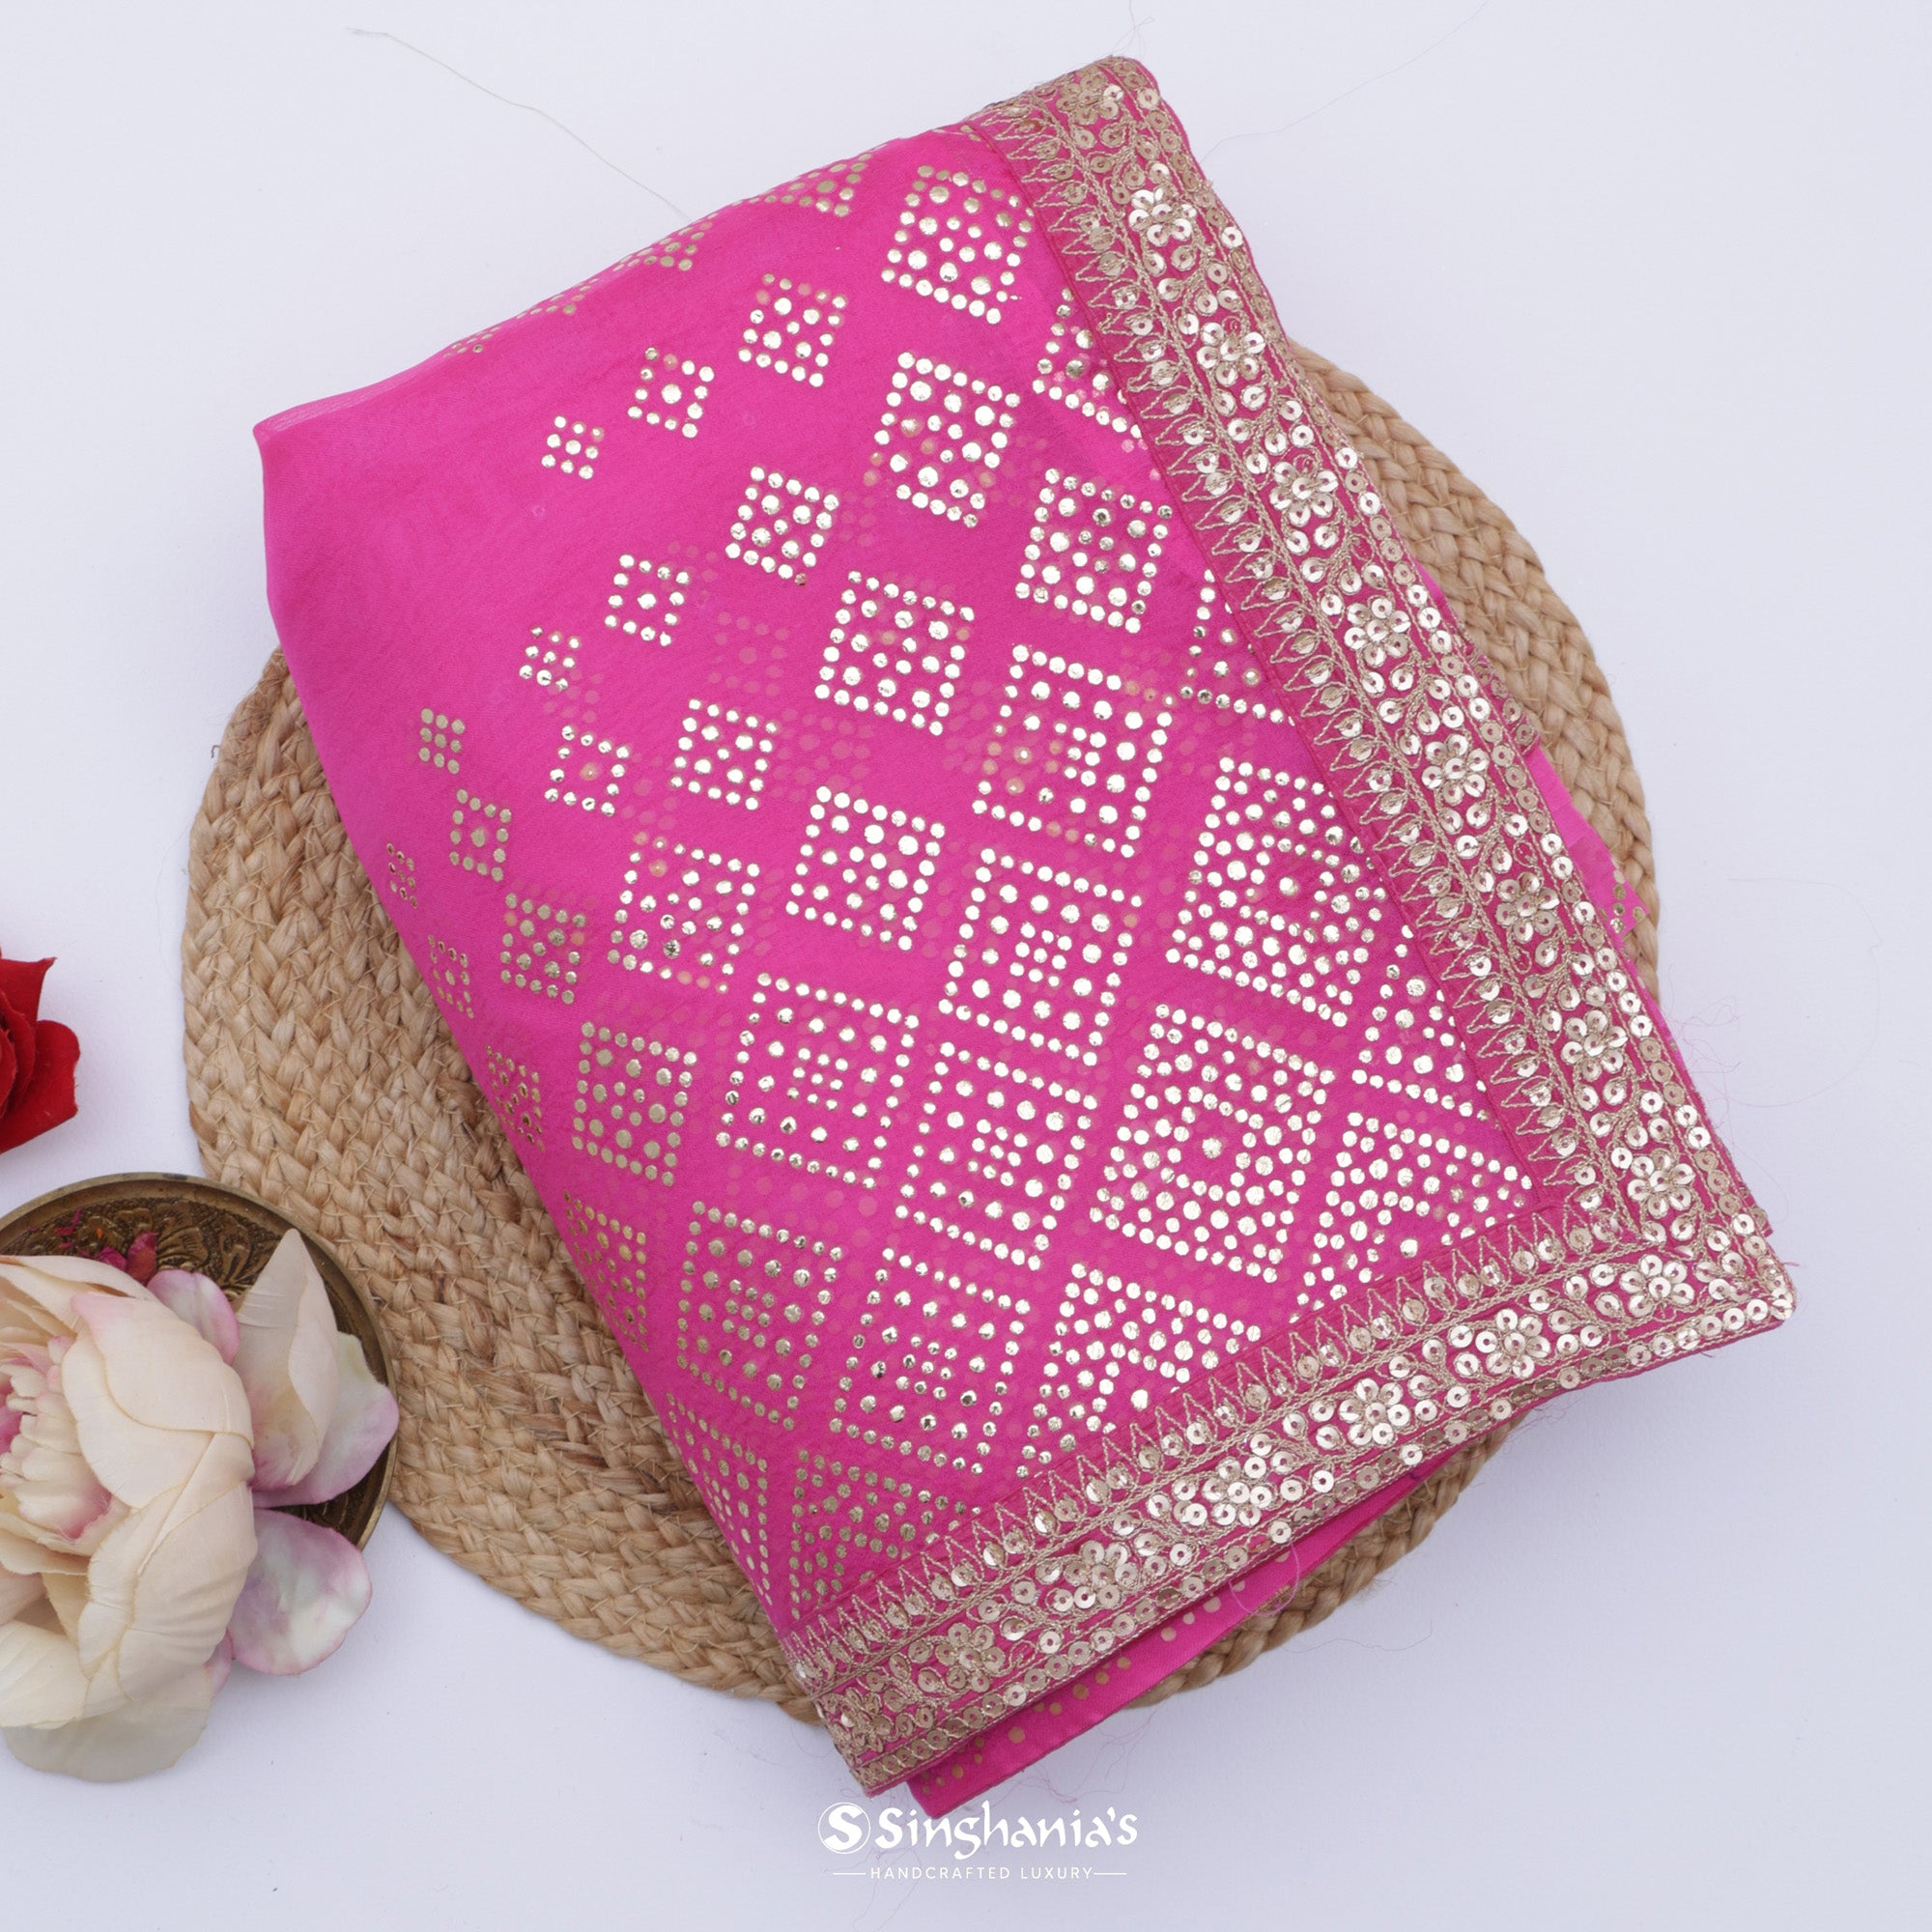 Rose Pink Printed Organza Saree With Mukaish Pattern